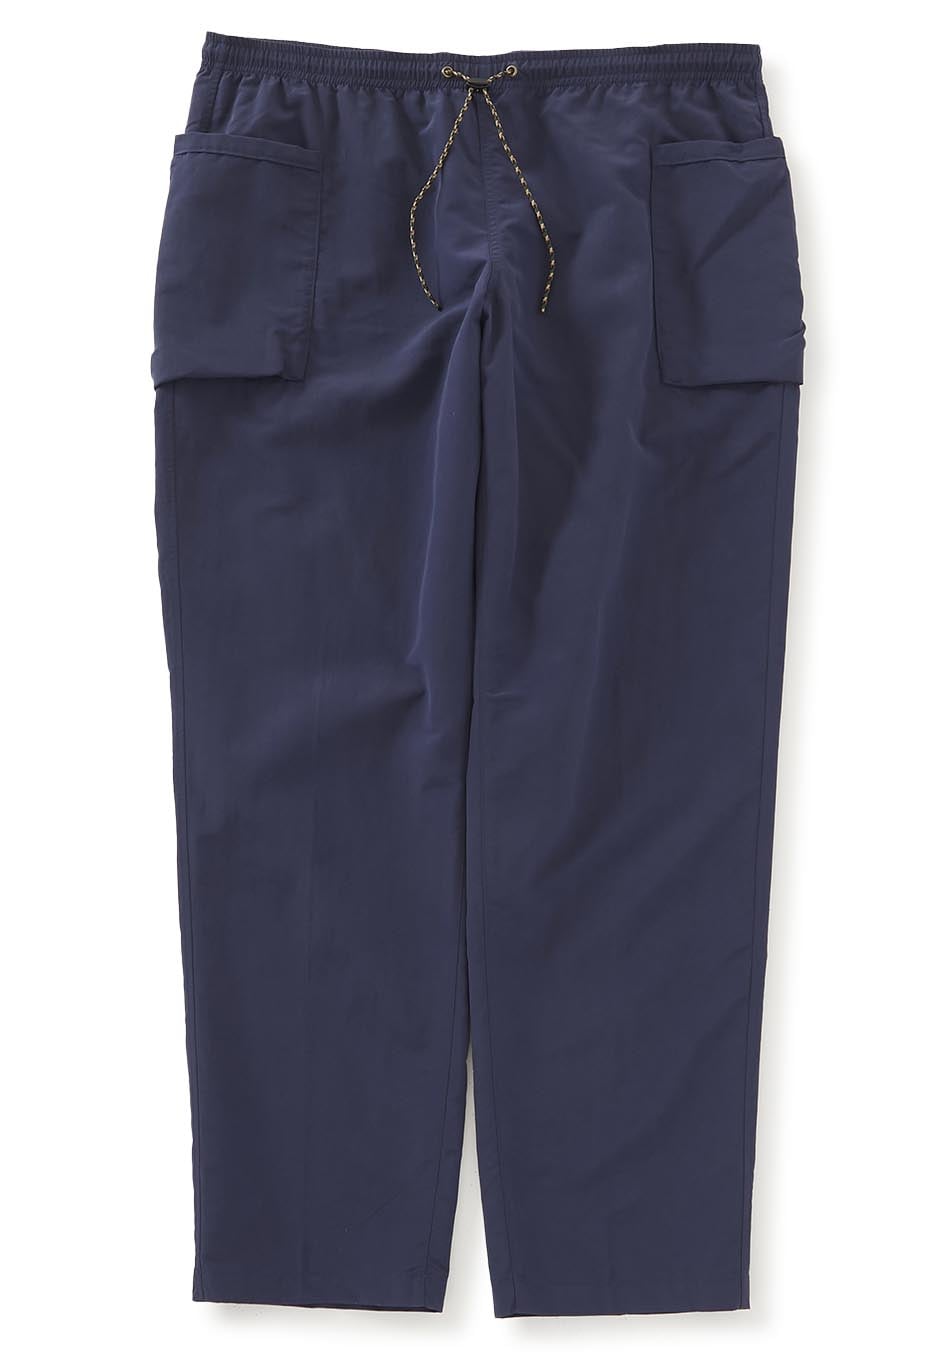 MRD Windshed Side Pocket relaxed pants